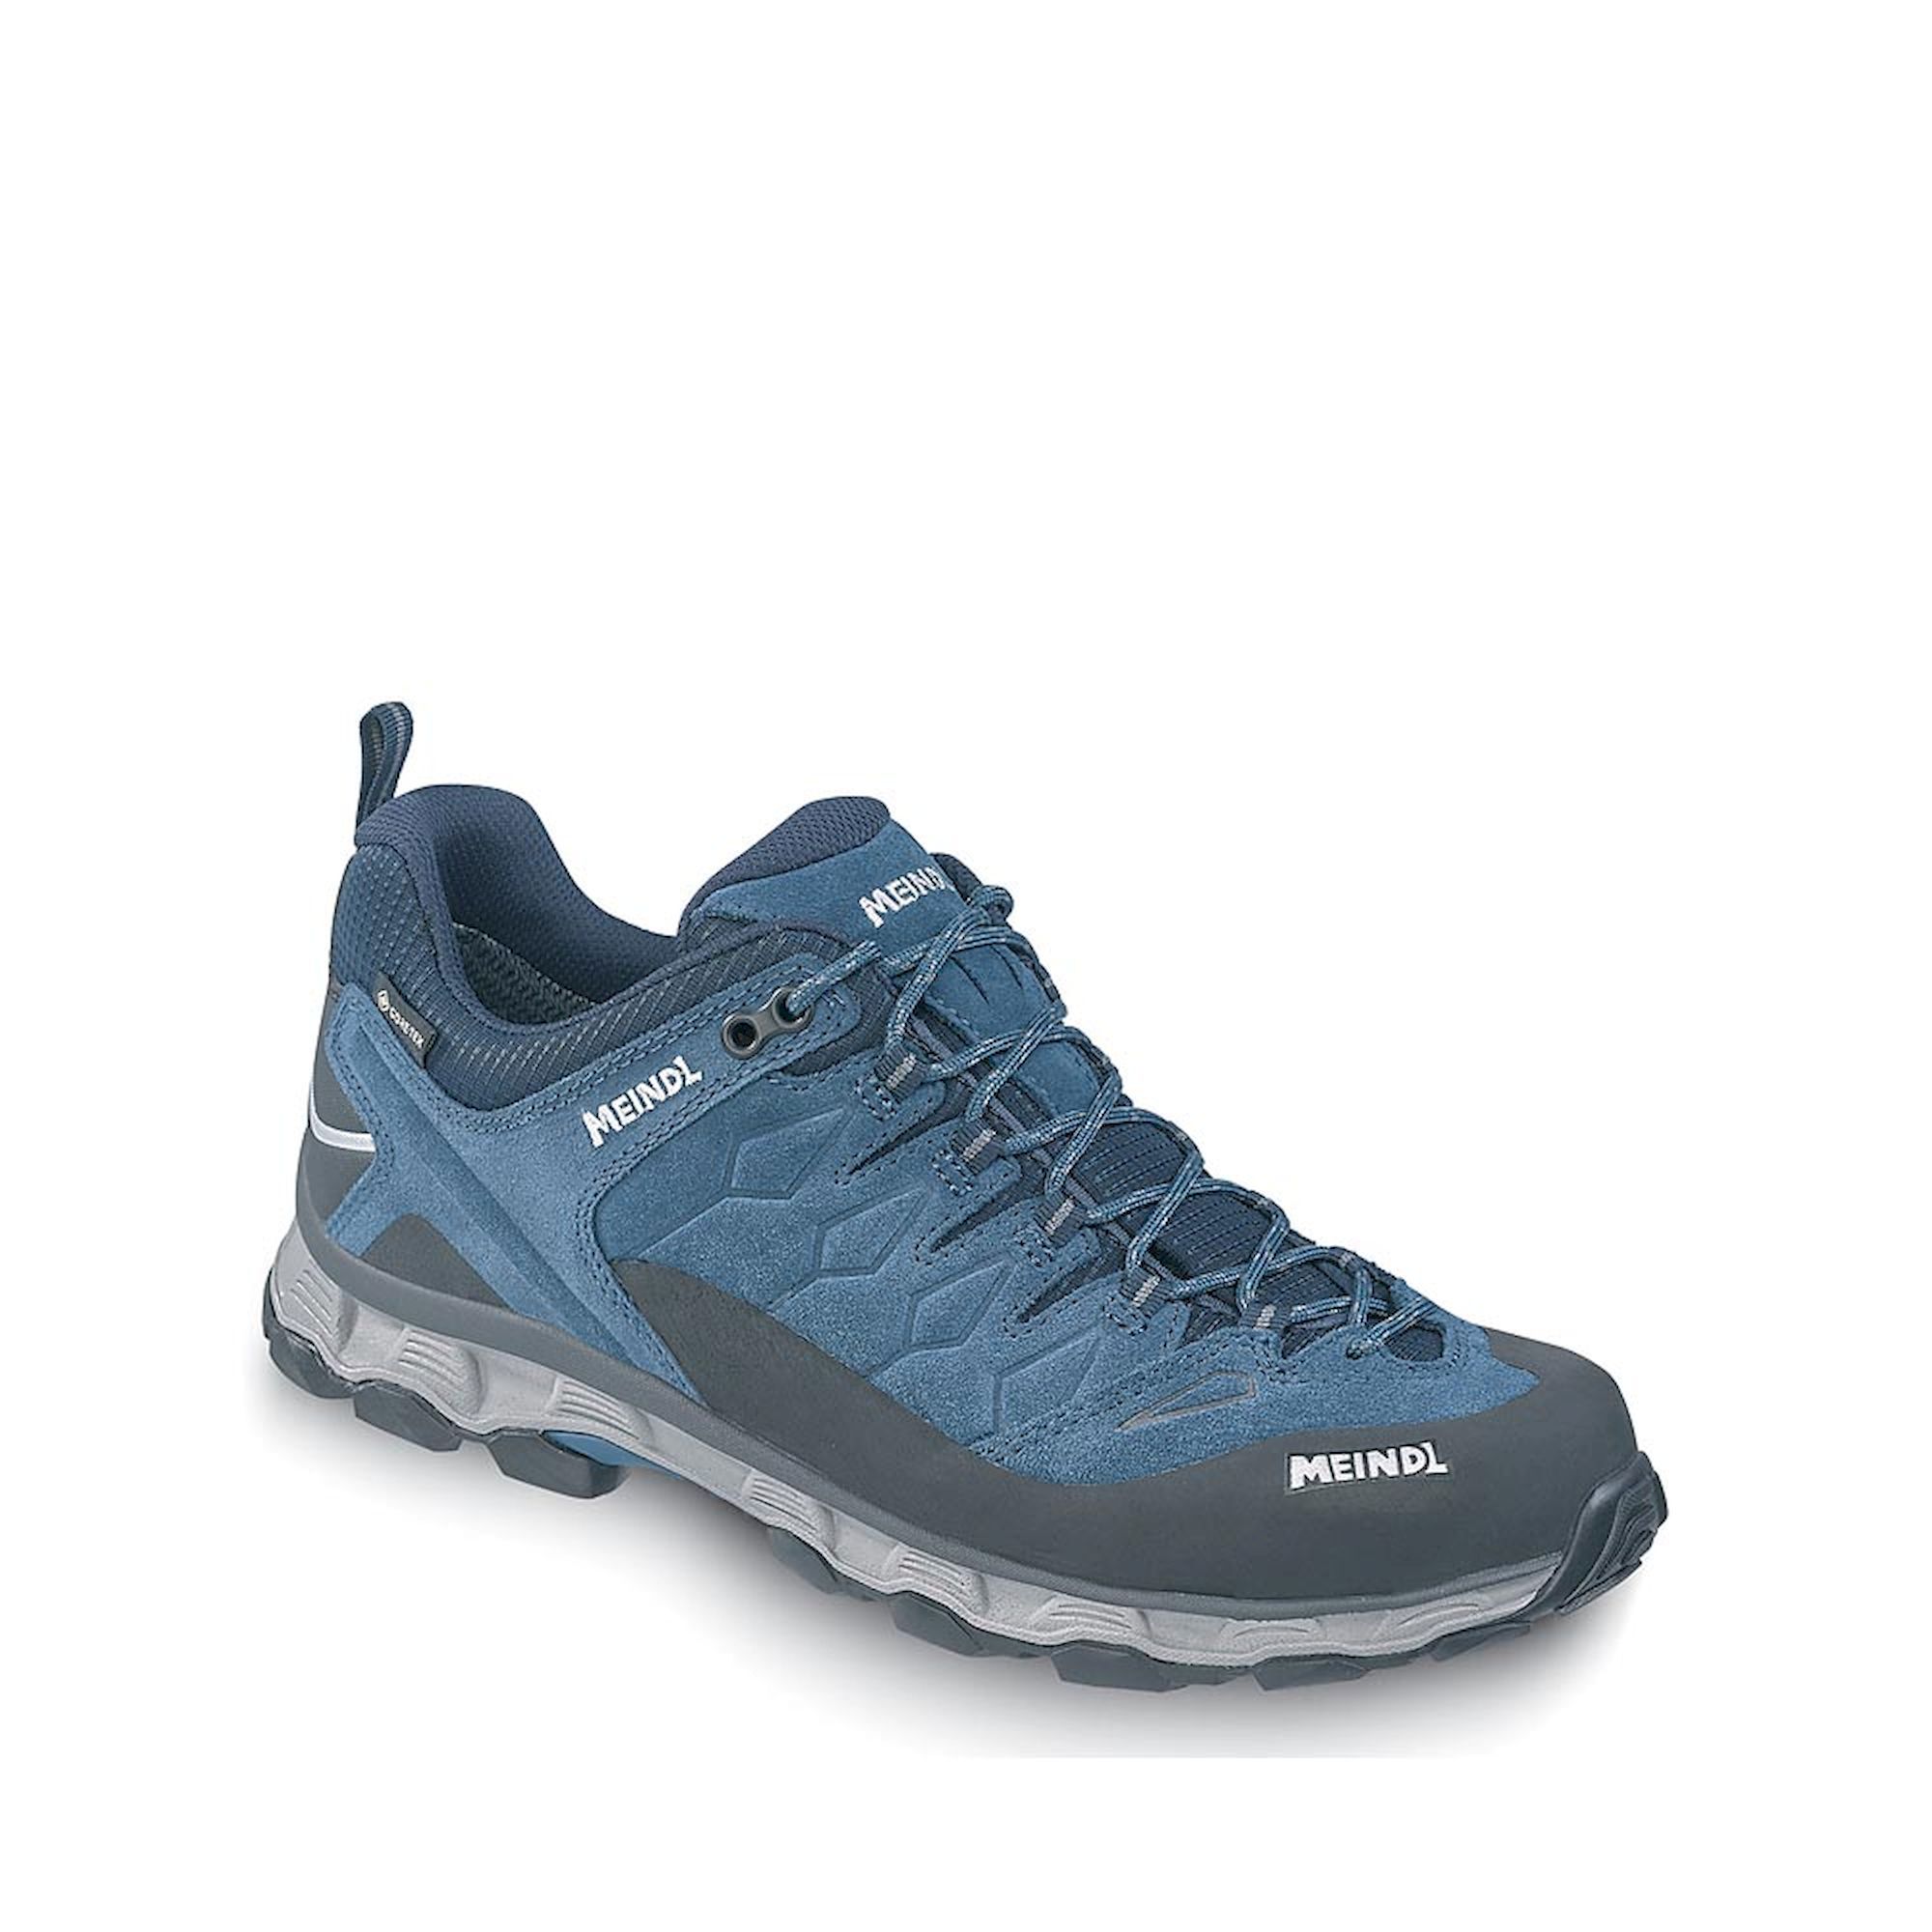 Meindl Lite Trail GTX  - Walking shoes - Men's